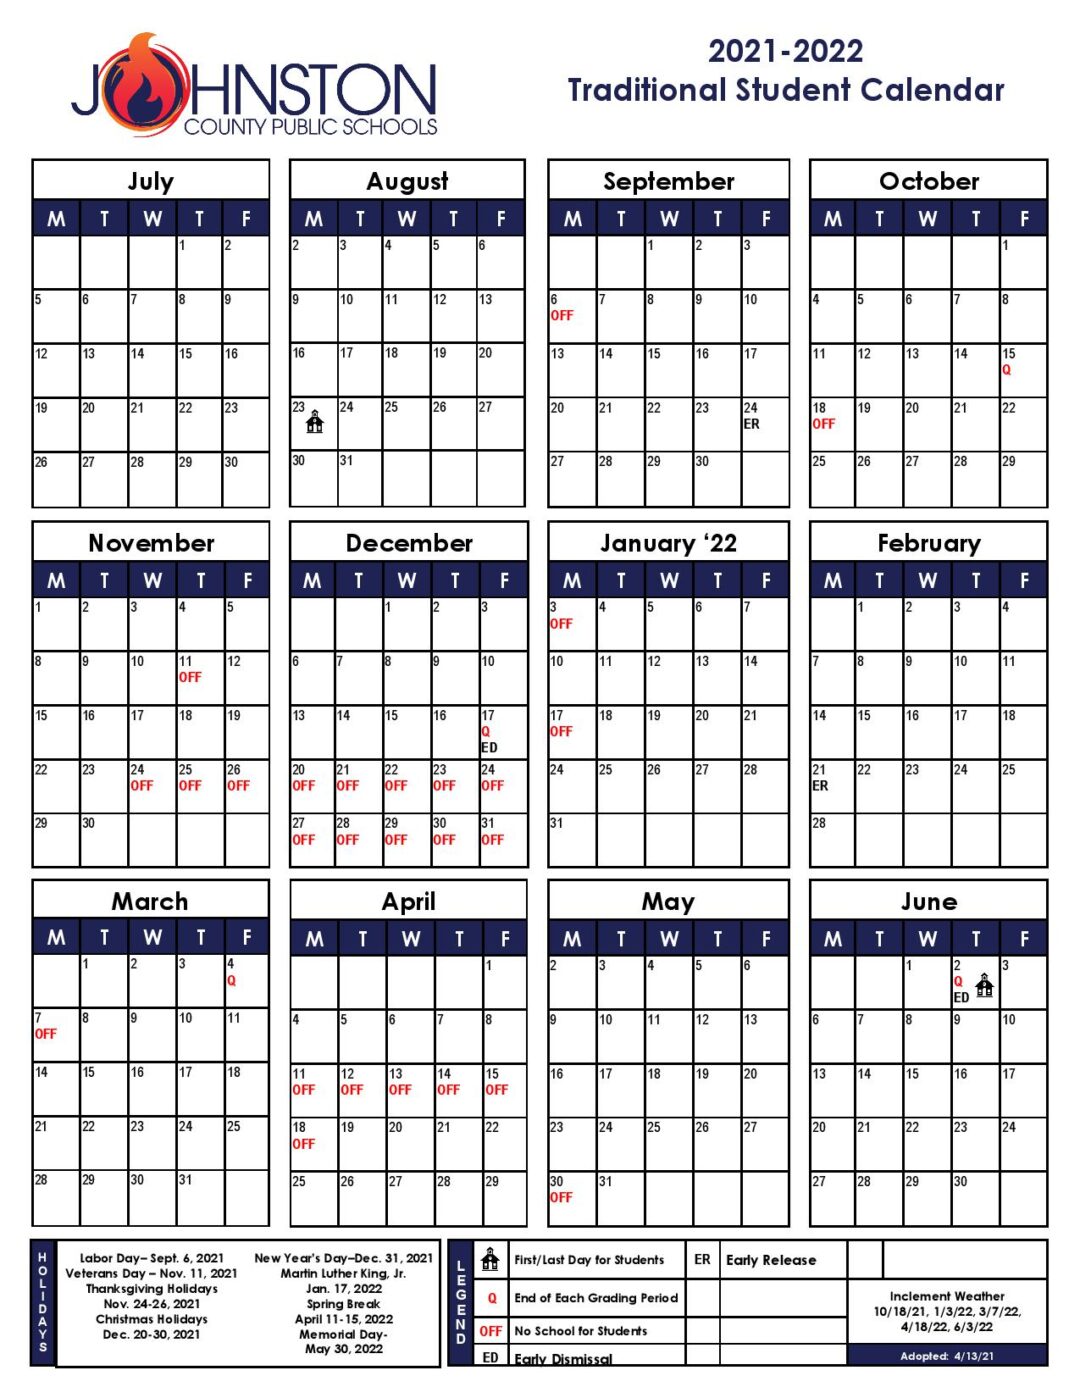 Johnston County Schools Calendar 2021-2022 in PDF